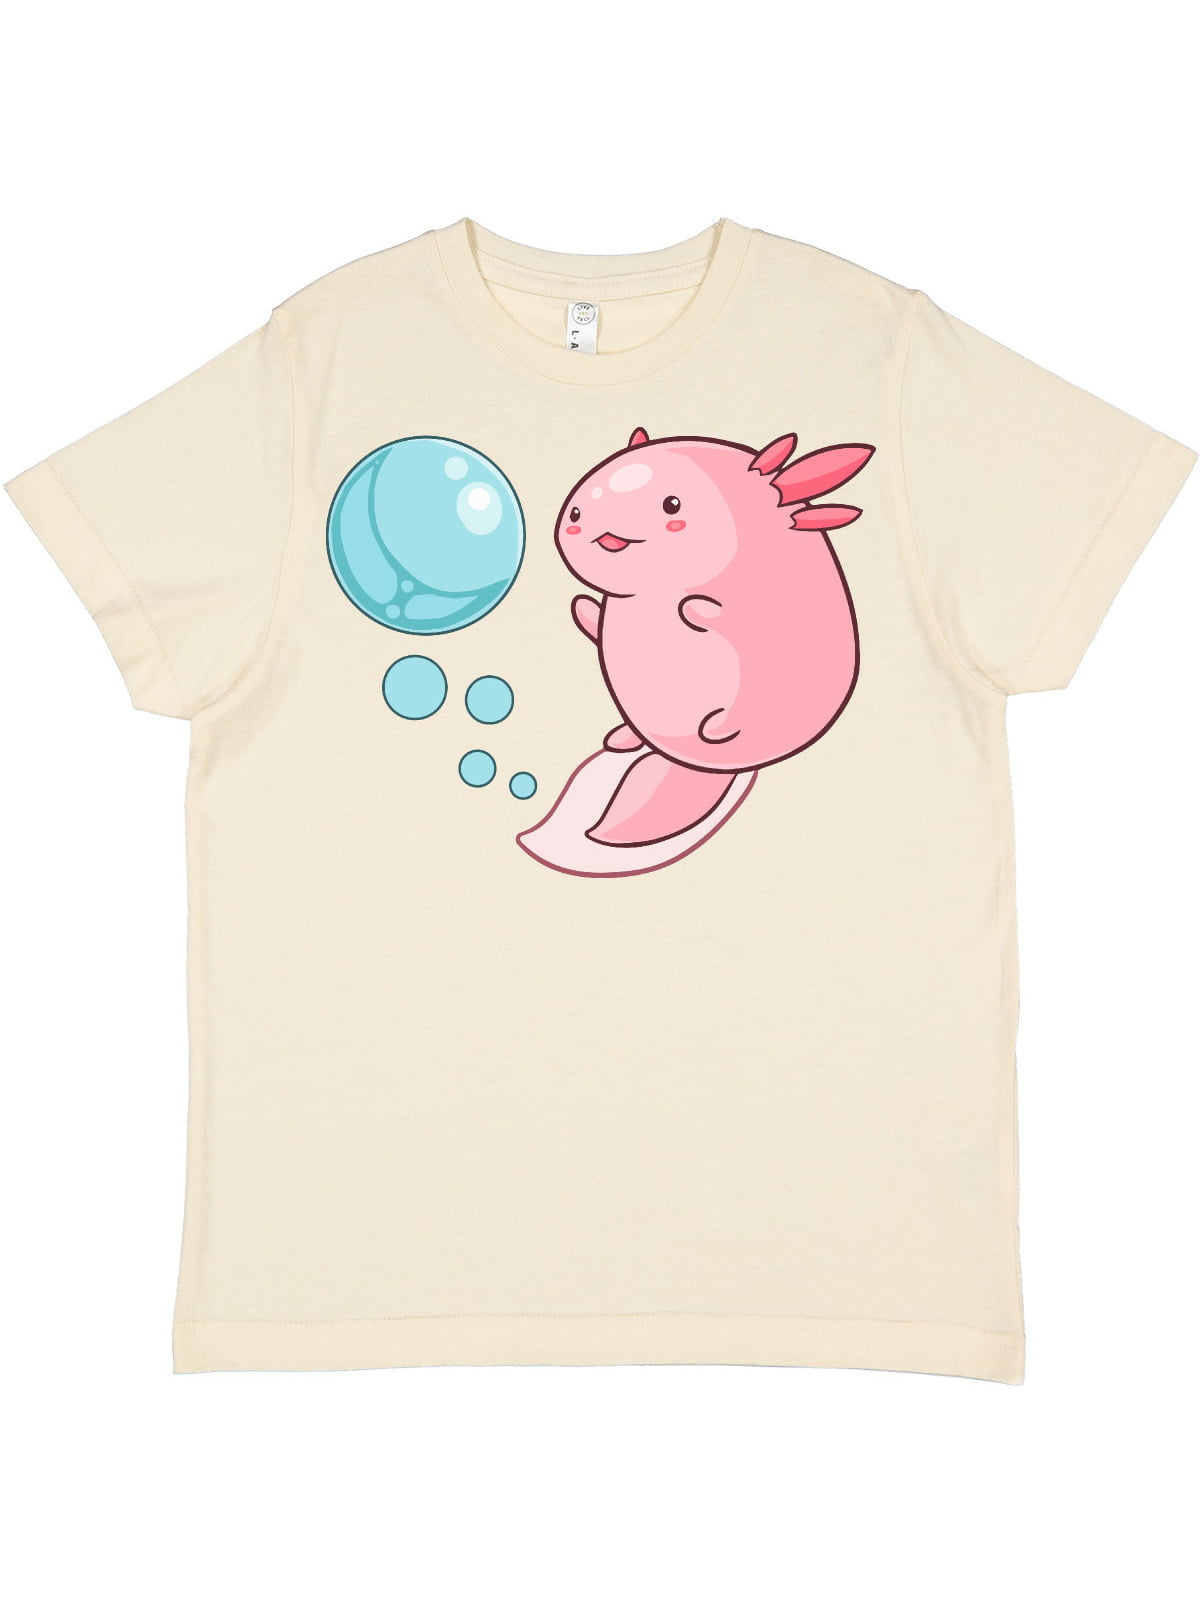 Axolotl Life Cycle Short-Sleeve Unisex T-Shirt